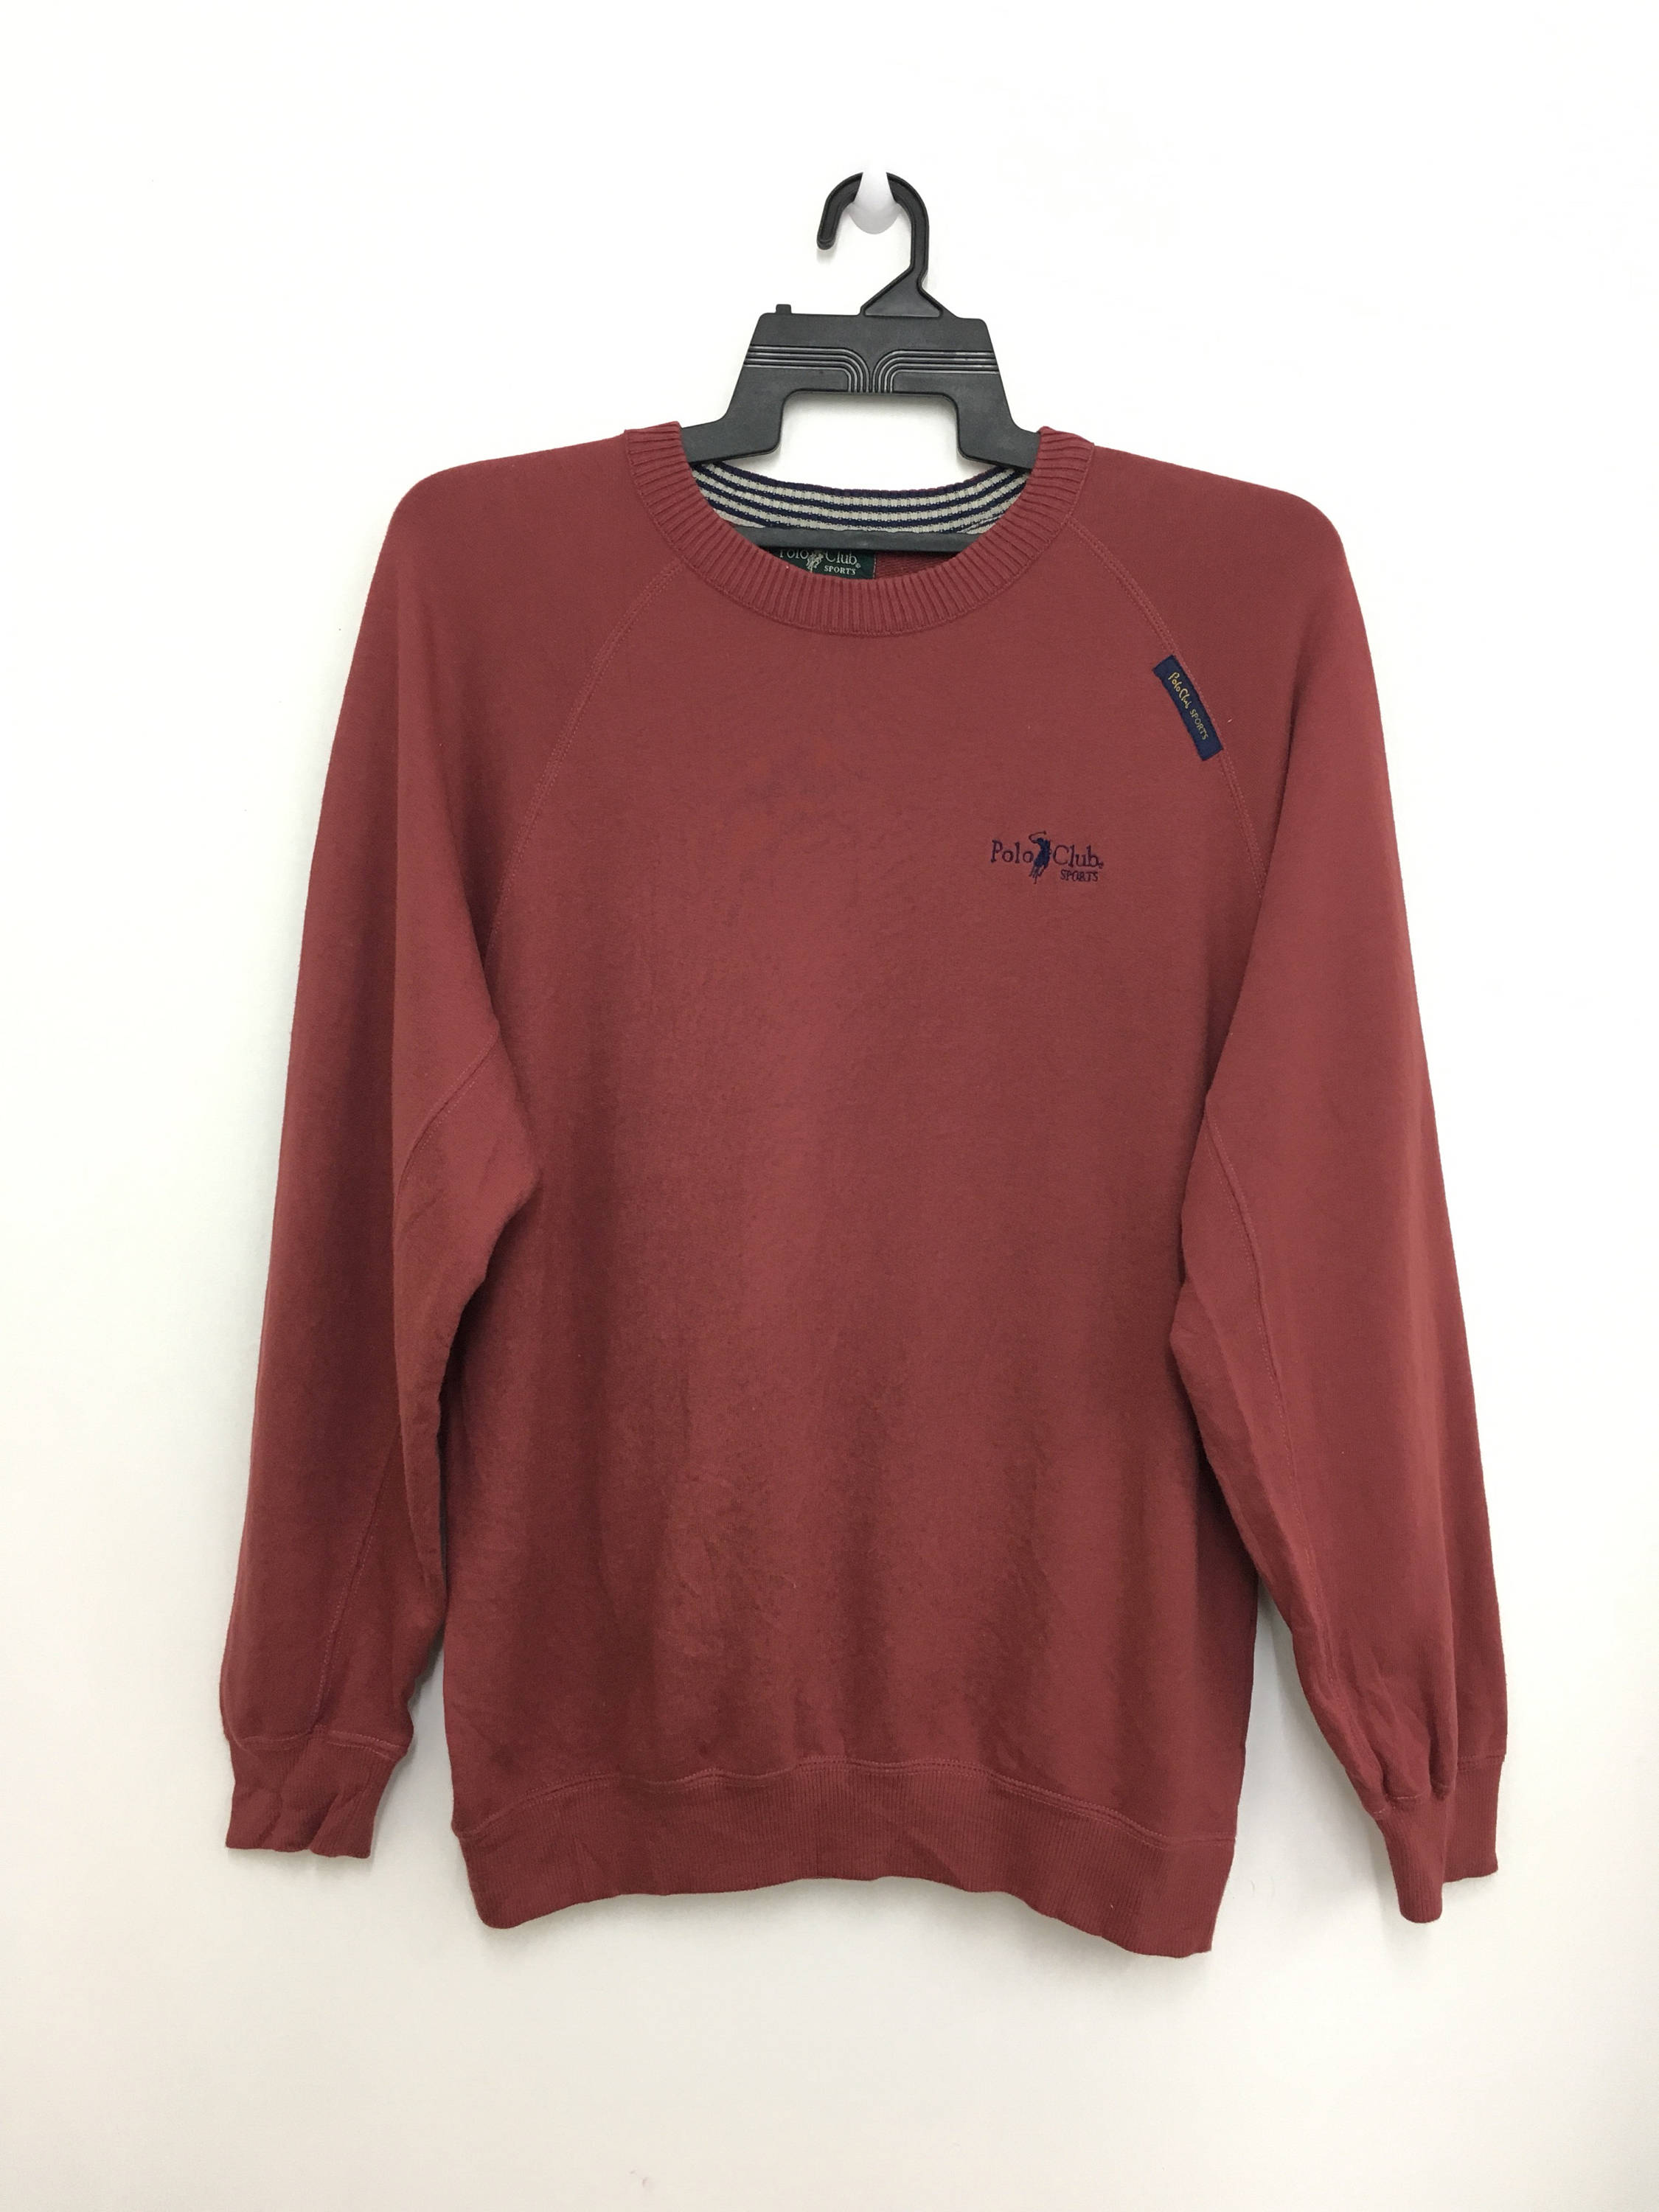 Sale Vintage Polo Club Sports Sweatshirt Pullover Medium - Etsy